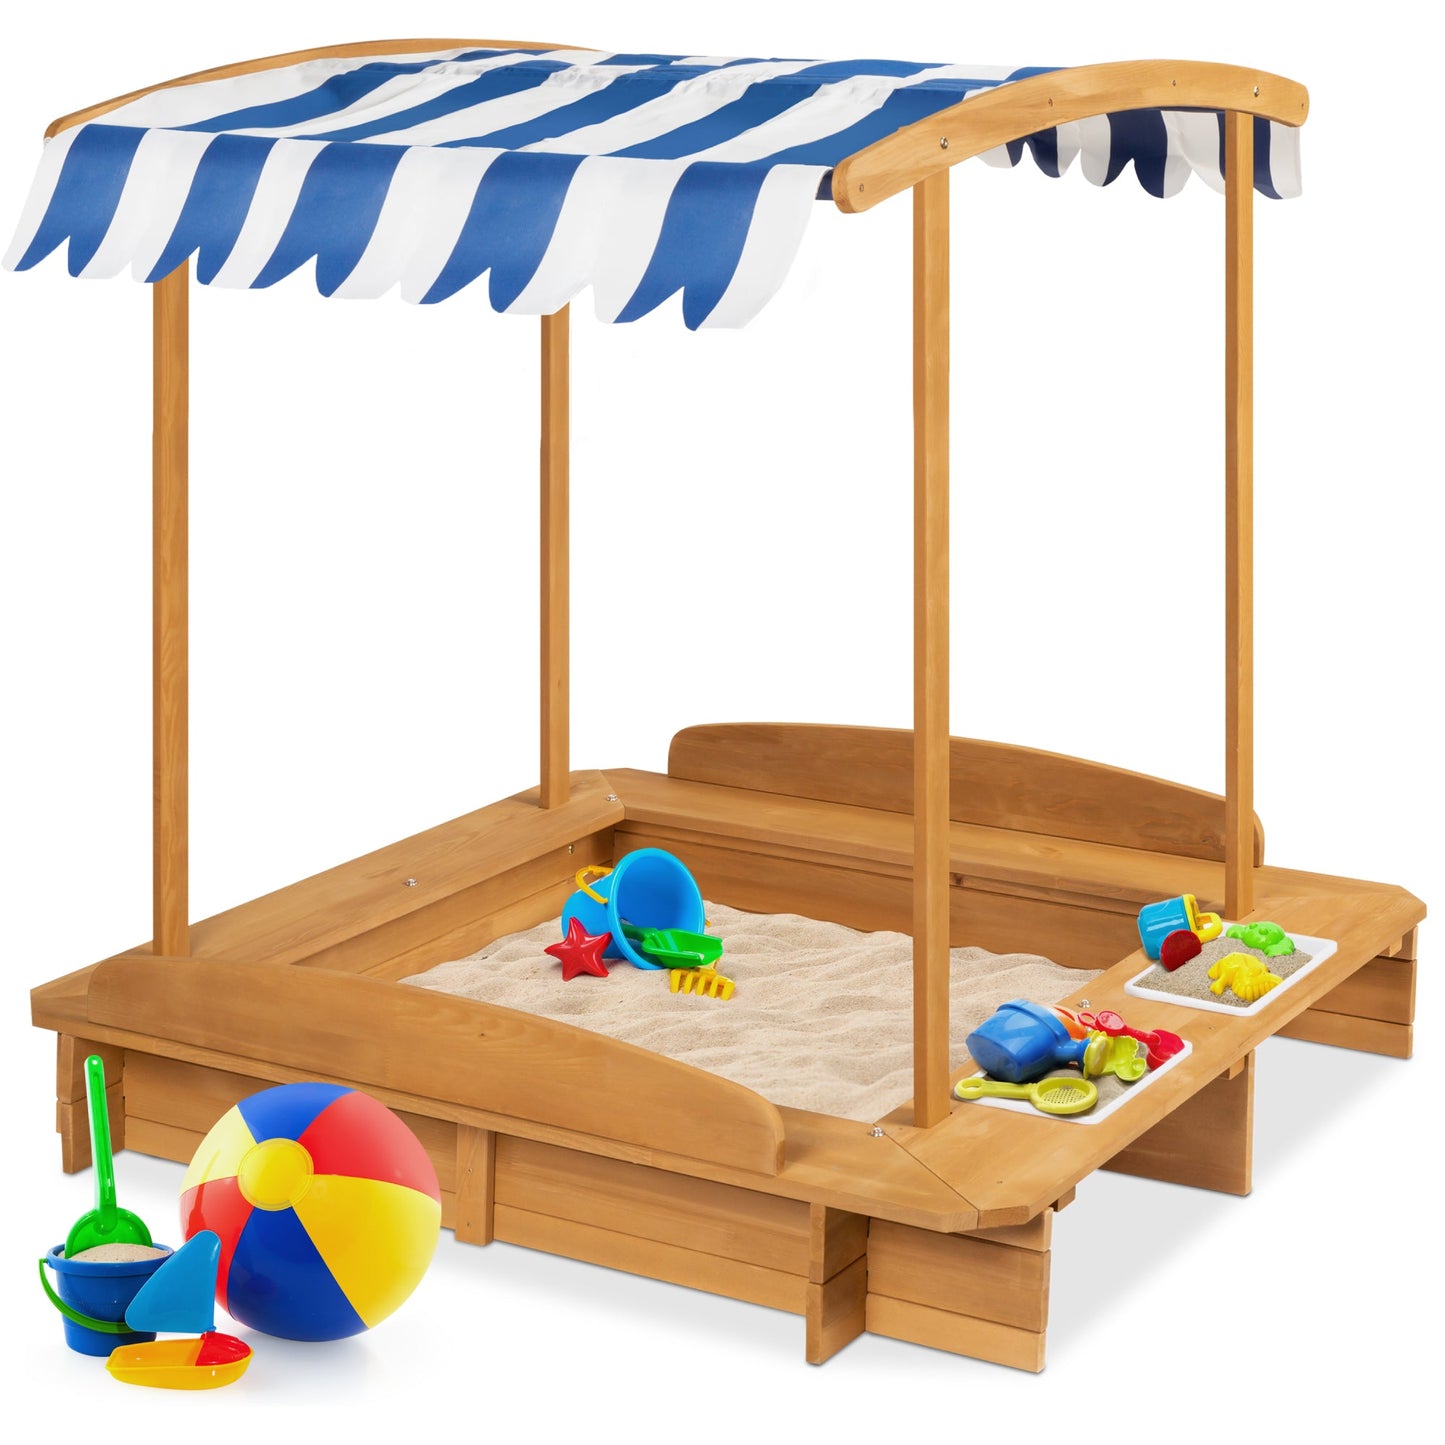 Kids Wooden Cabana Sandbox w/ Benches, Canopy Shade, Sand Cover, 2 Buckets